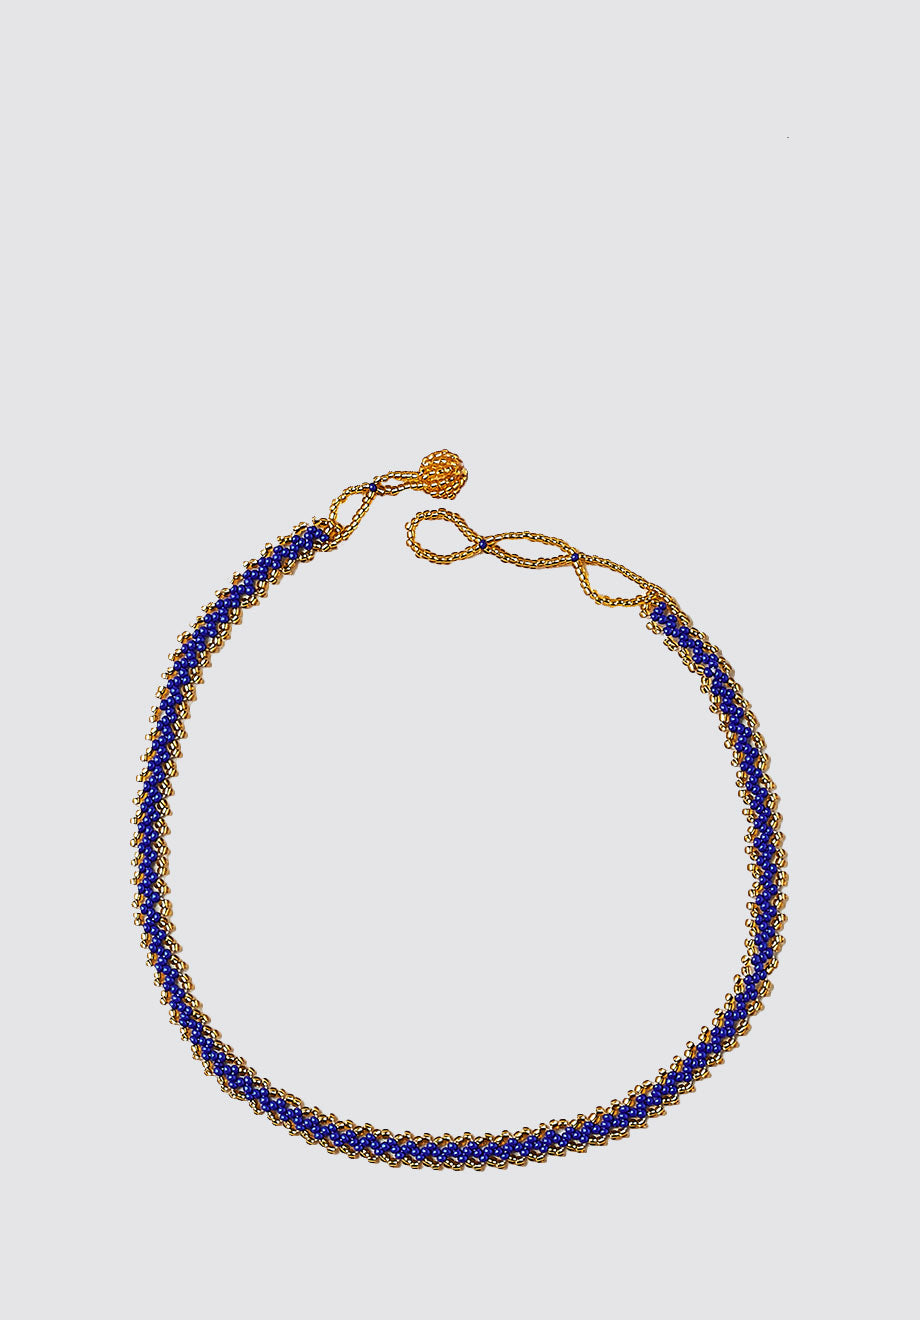 Beaded Necklace | Mathe's Stitch Gold & Blue